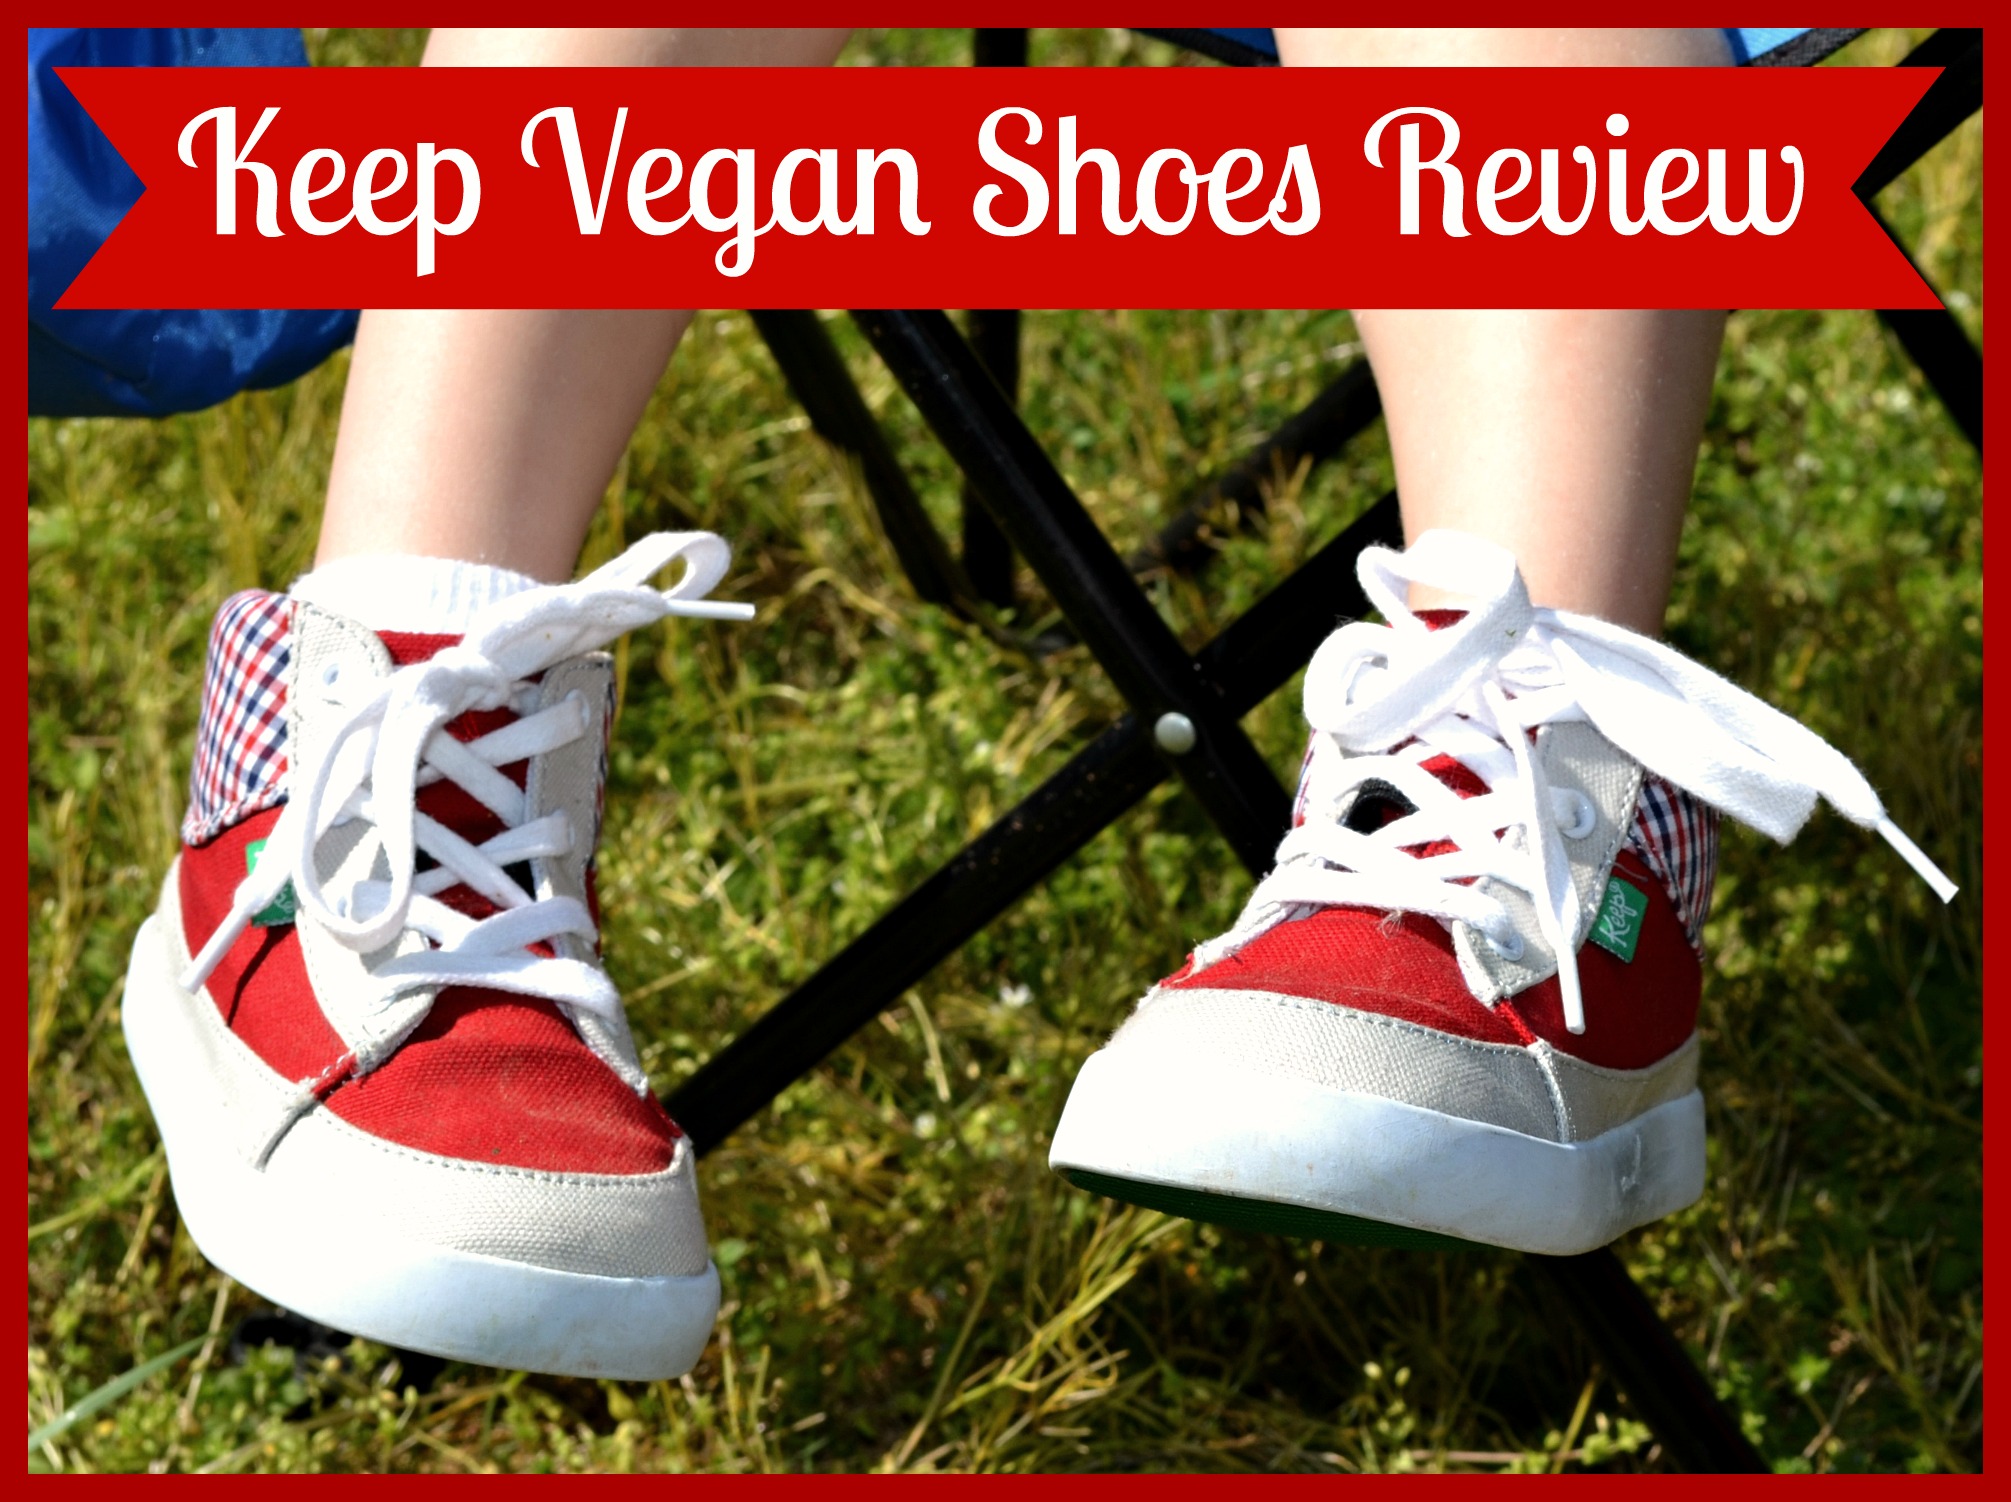 Keep Vegan Shoes Review